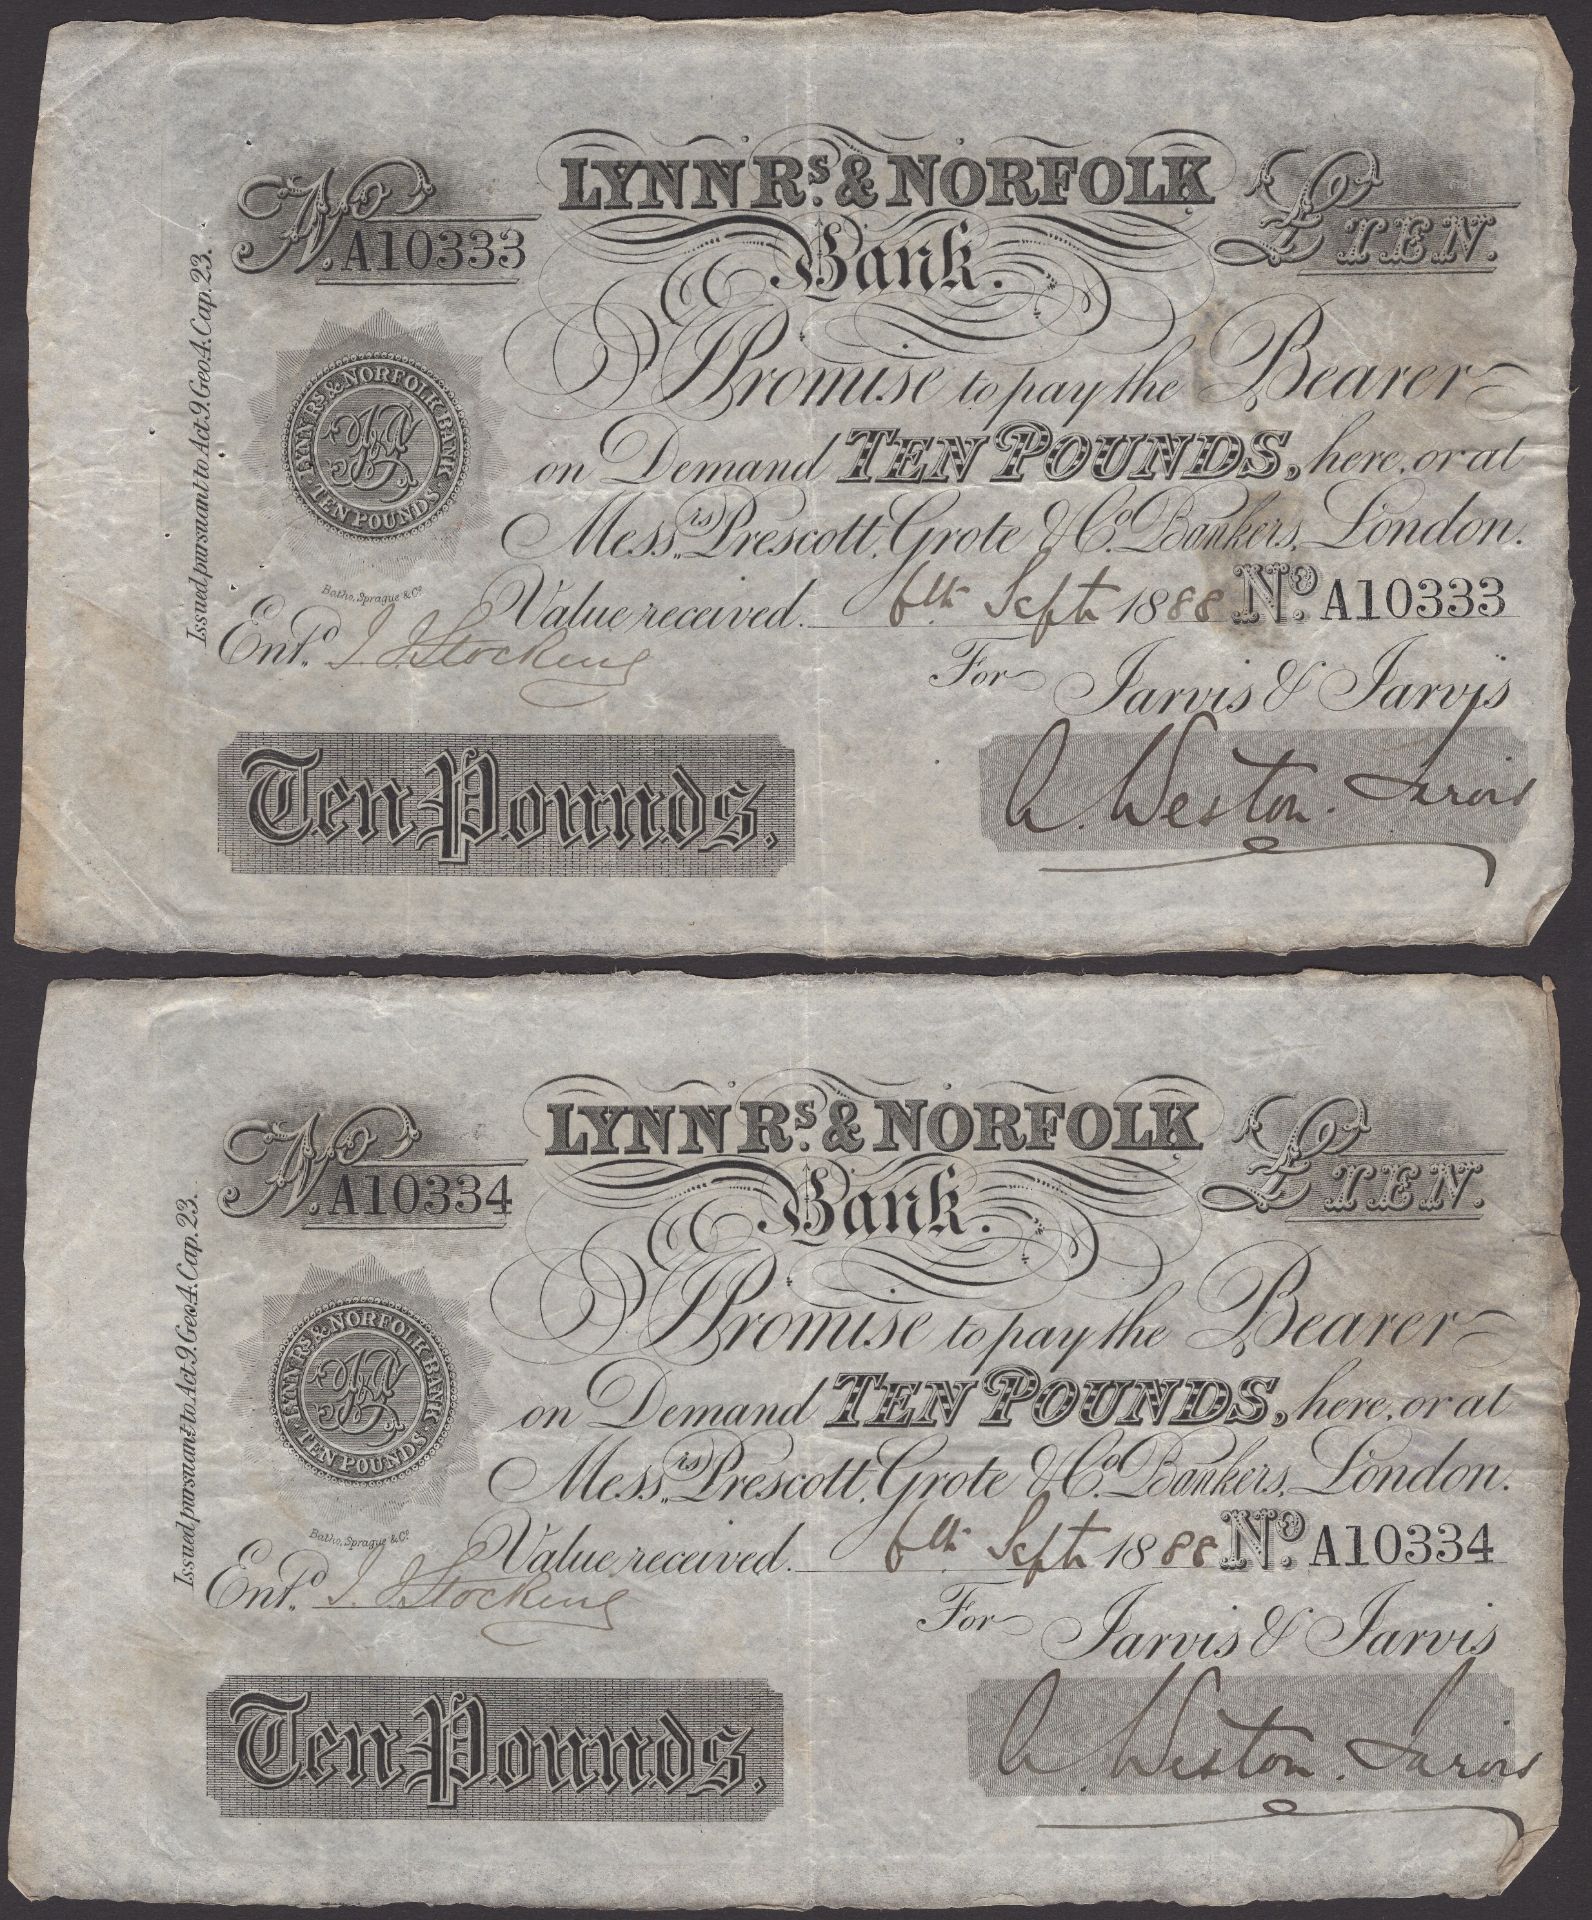 British Banknotes - Image 3 of 4